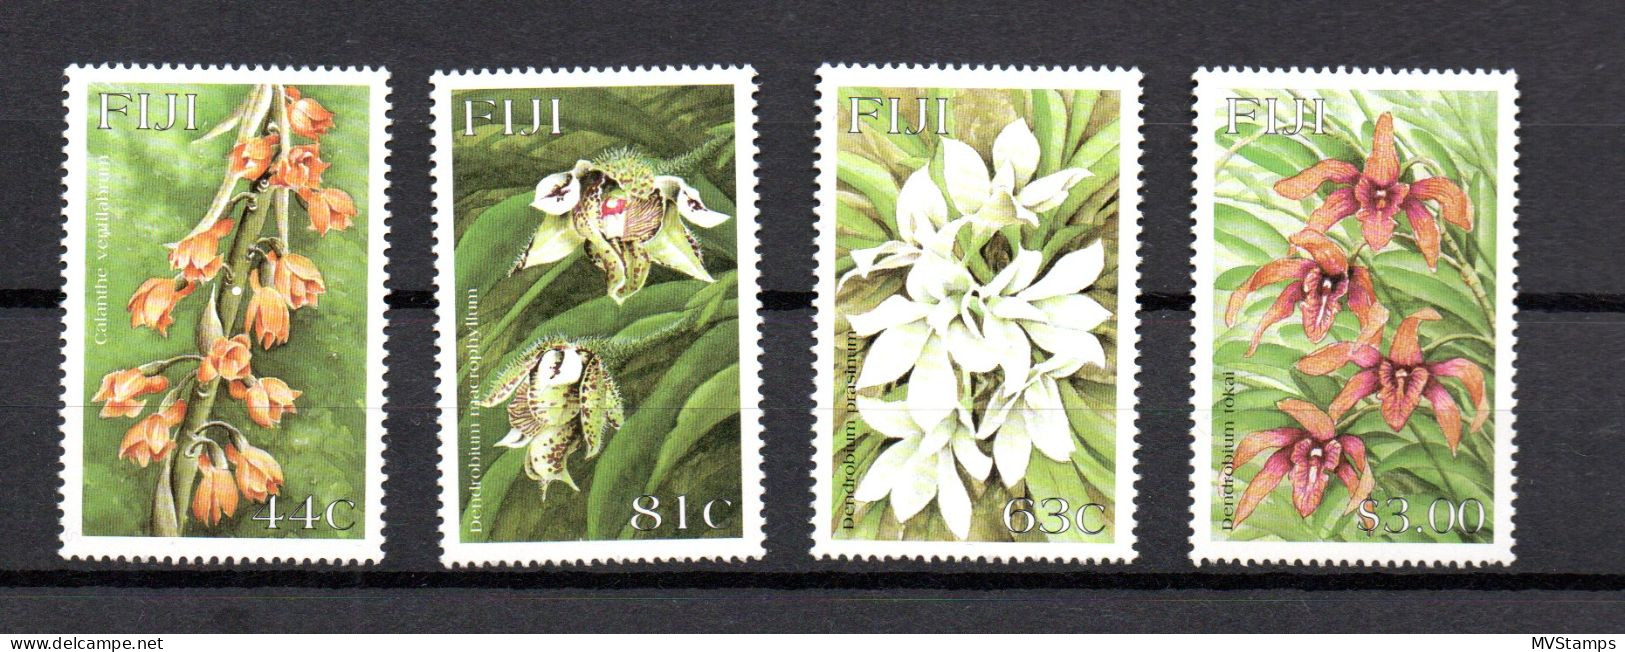 Fiji 1999 Set Orchids/Flowers/Blumen Stamps (Michel 880/83) MNH - Fiji (1970-...)